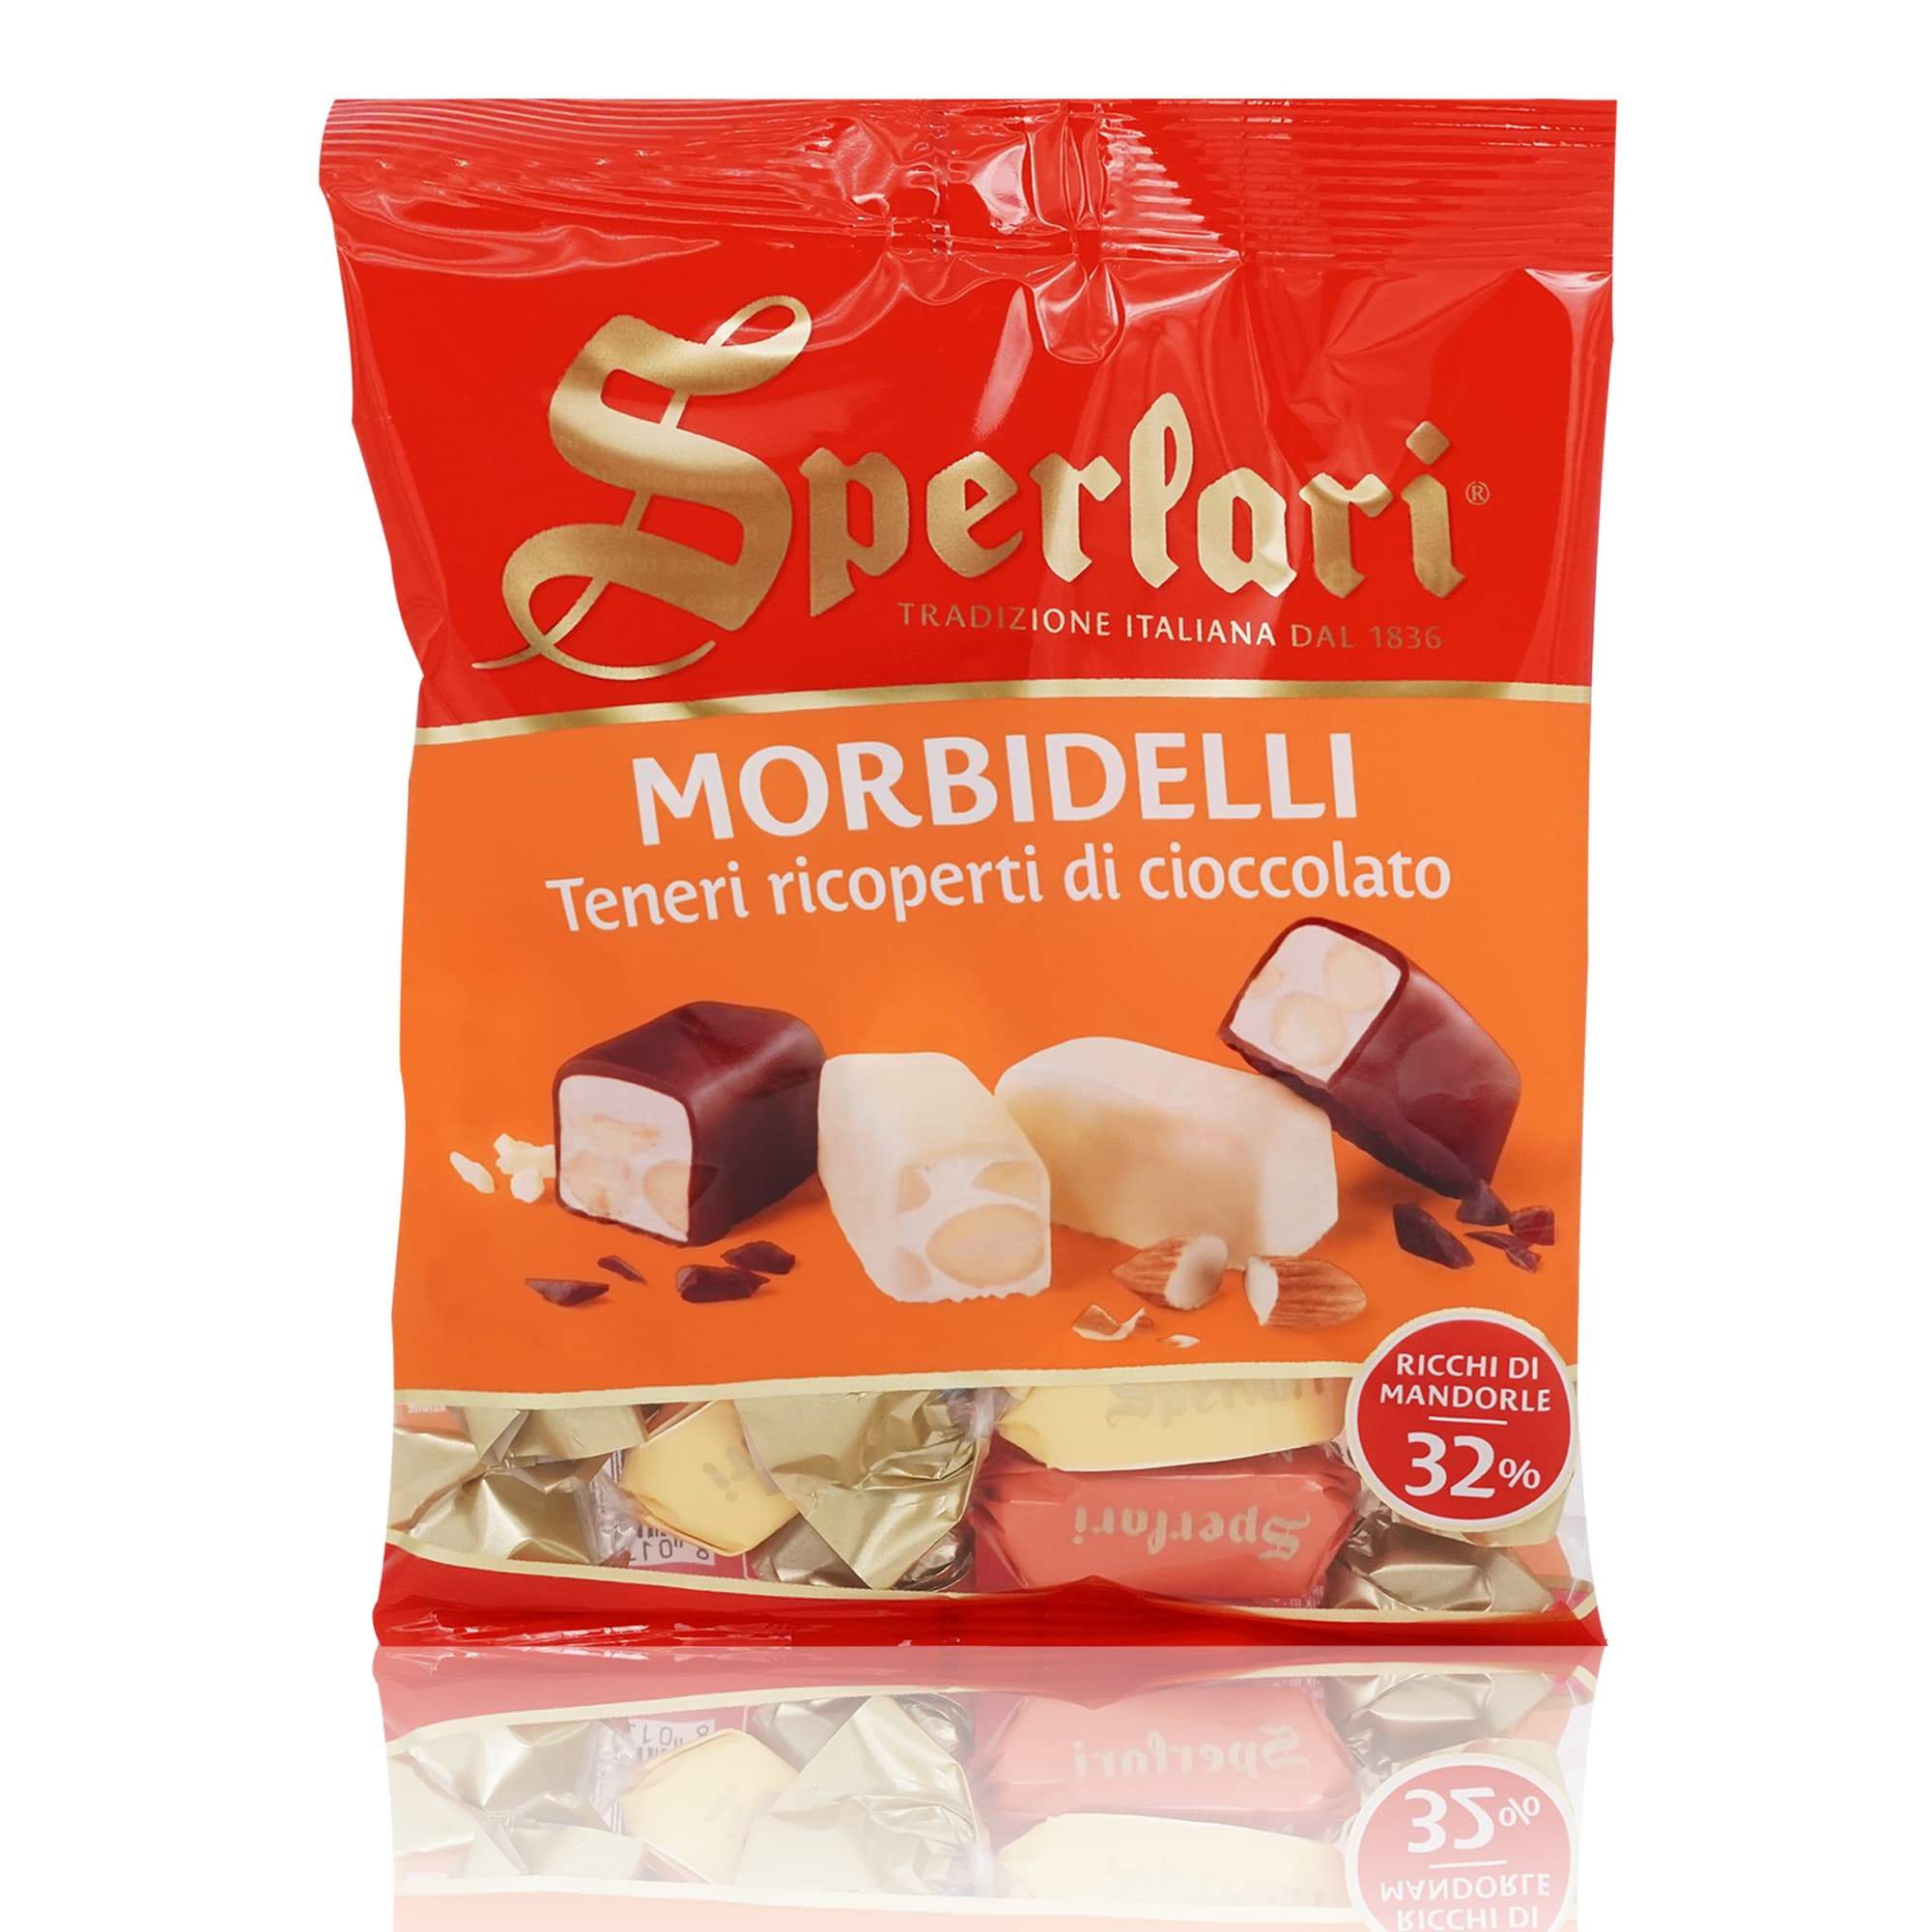 SPERLARI Morbidelli teneri ric.di cioccolato – Weiche Torroncini mit Schokoüberzug - 0,117kg - italienisch-einkaufen.de